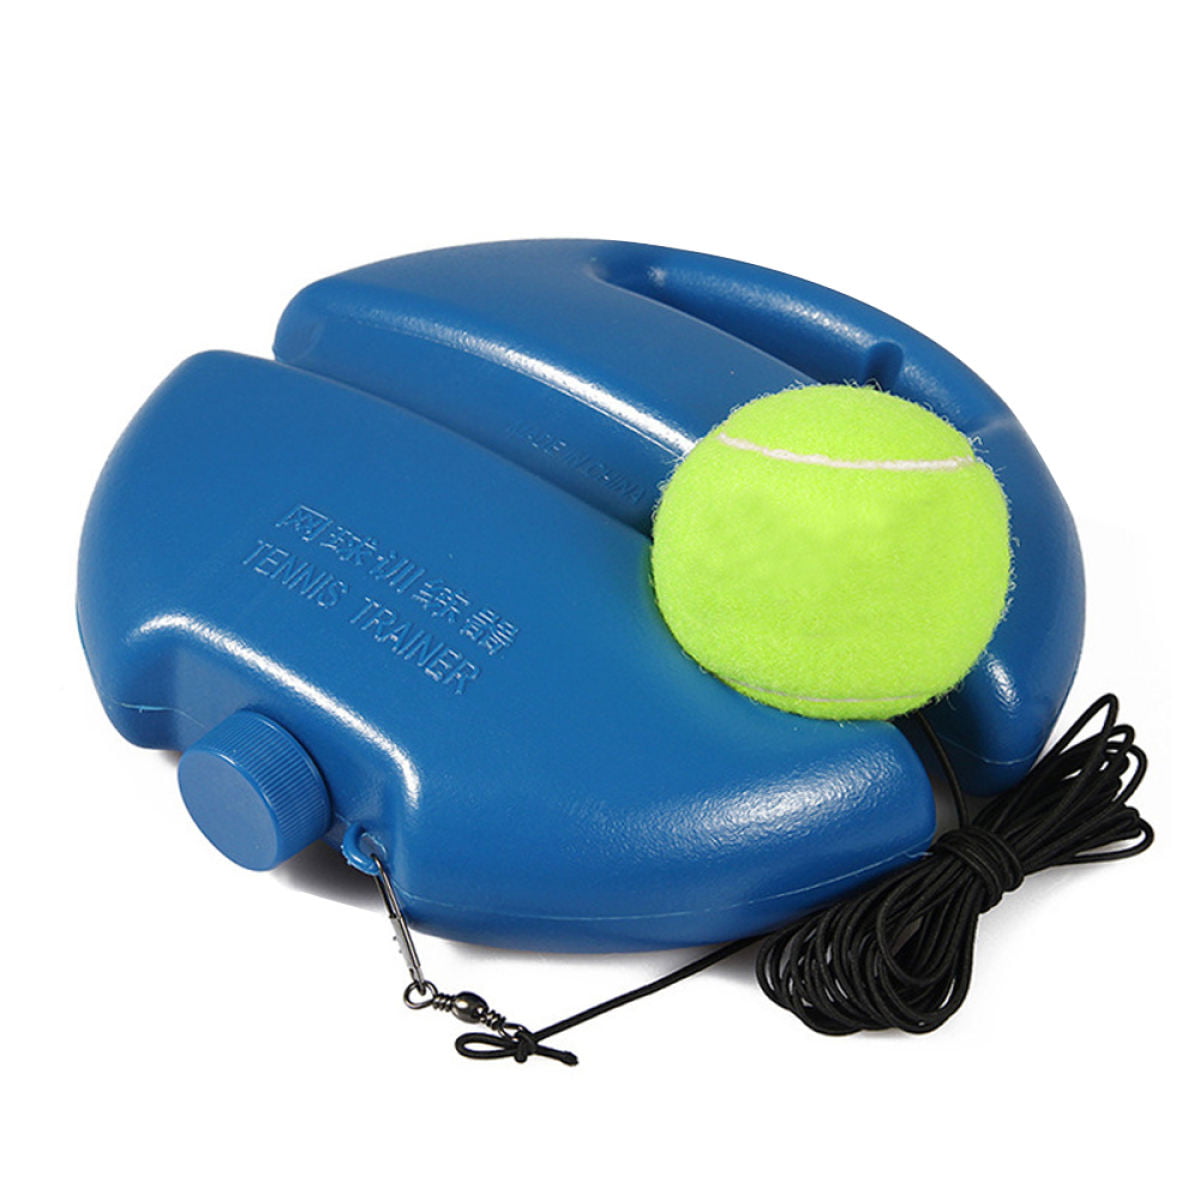 Tennis Trainer Tennis Training Tool Exercise Ball Sport Self-Study Rebound Ball Trainer 